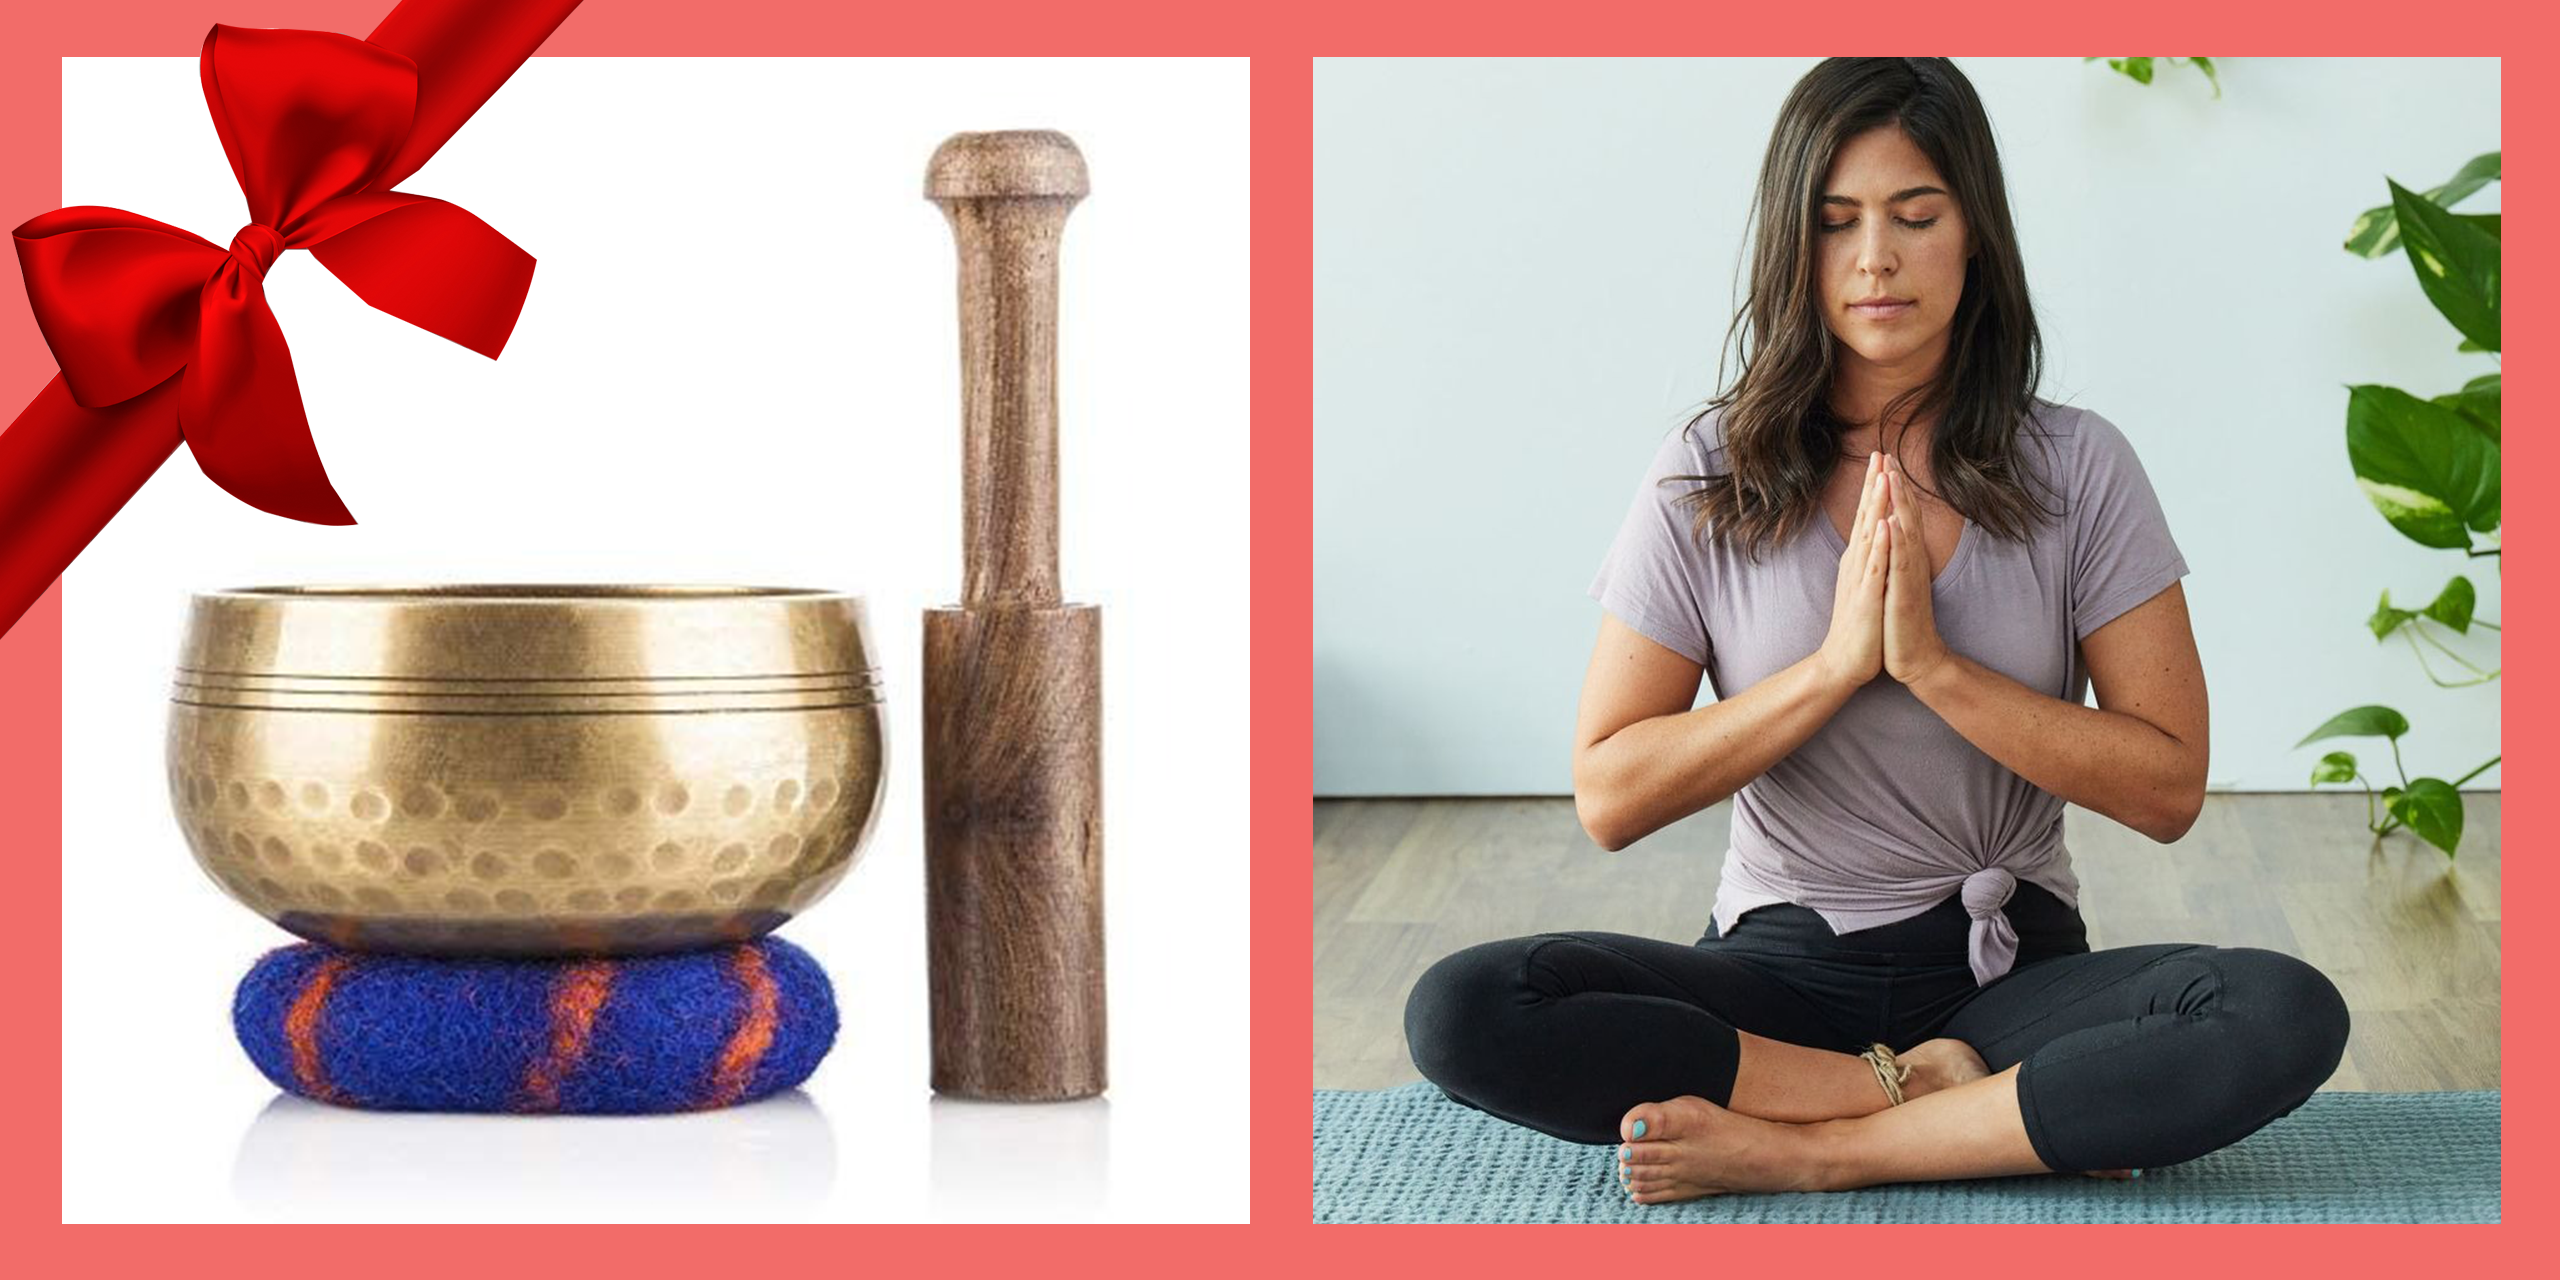 25 Meditation Gift Ideas for Mindfulness - Awake & Mindful  Meditation  gifts, Unique christmas gifts, Christmas gift box